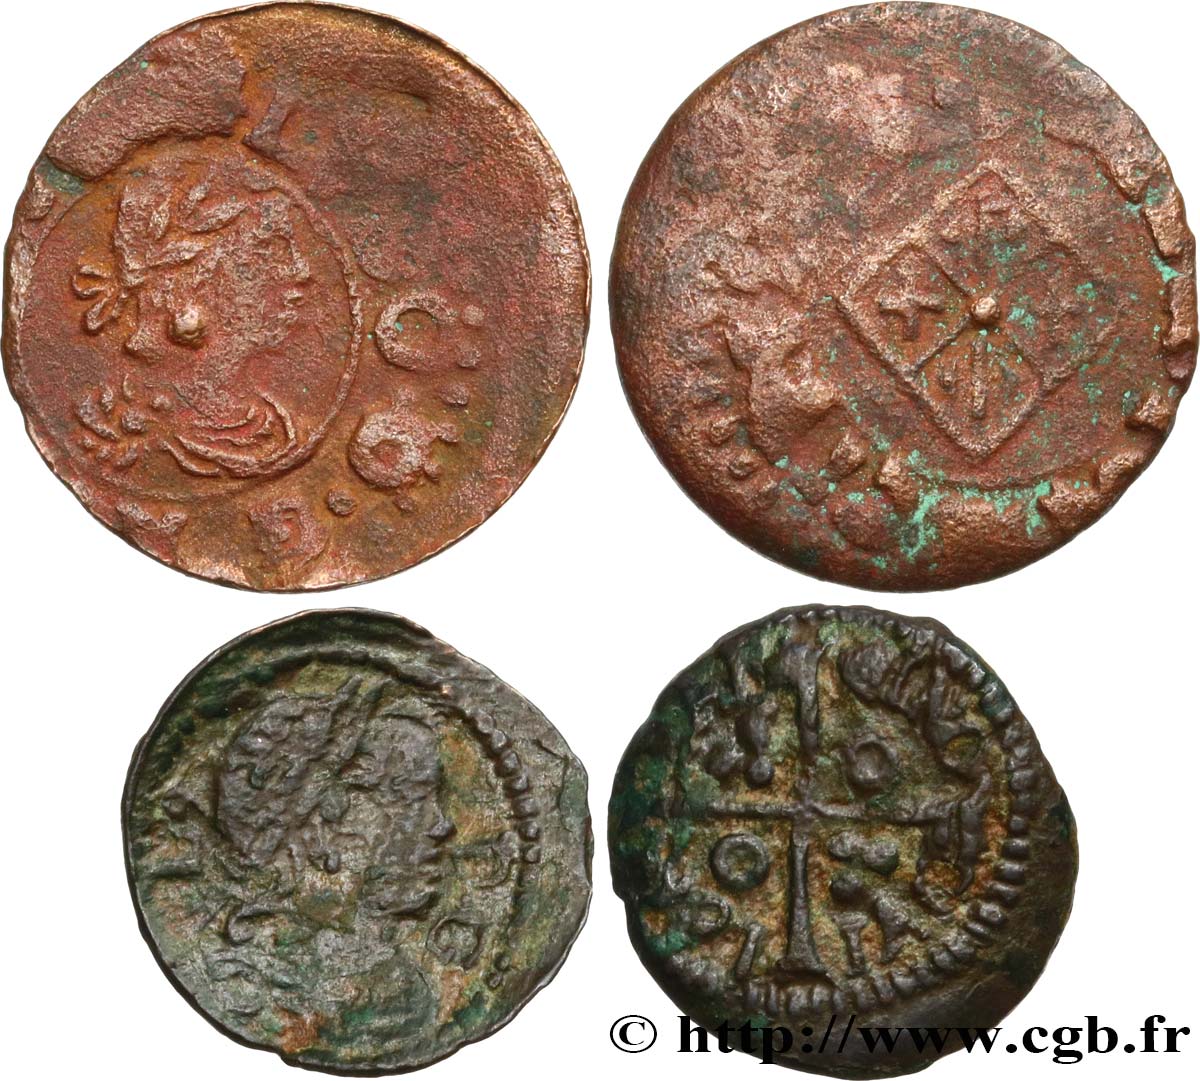 SPANIA - PRINCIPAUTY OF CATALONIA - LOUIS XIII Lot de 2 monnaies royales n.d. Ateliers divers BC